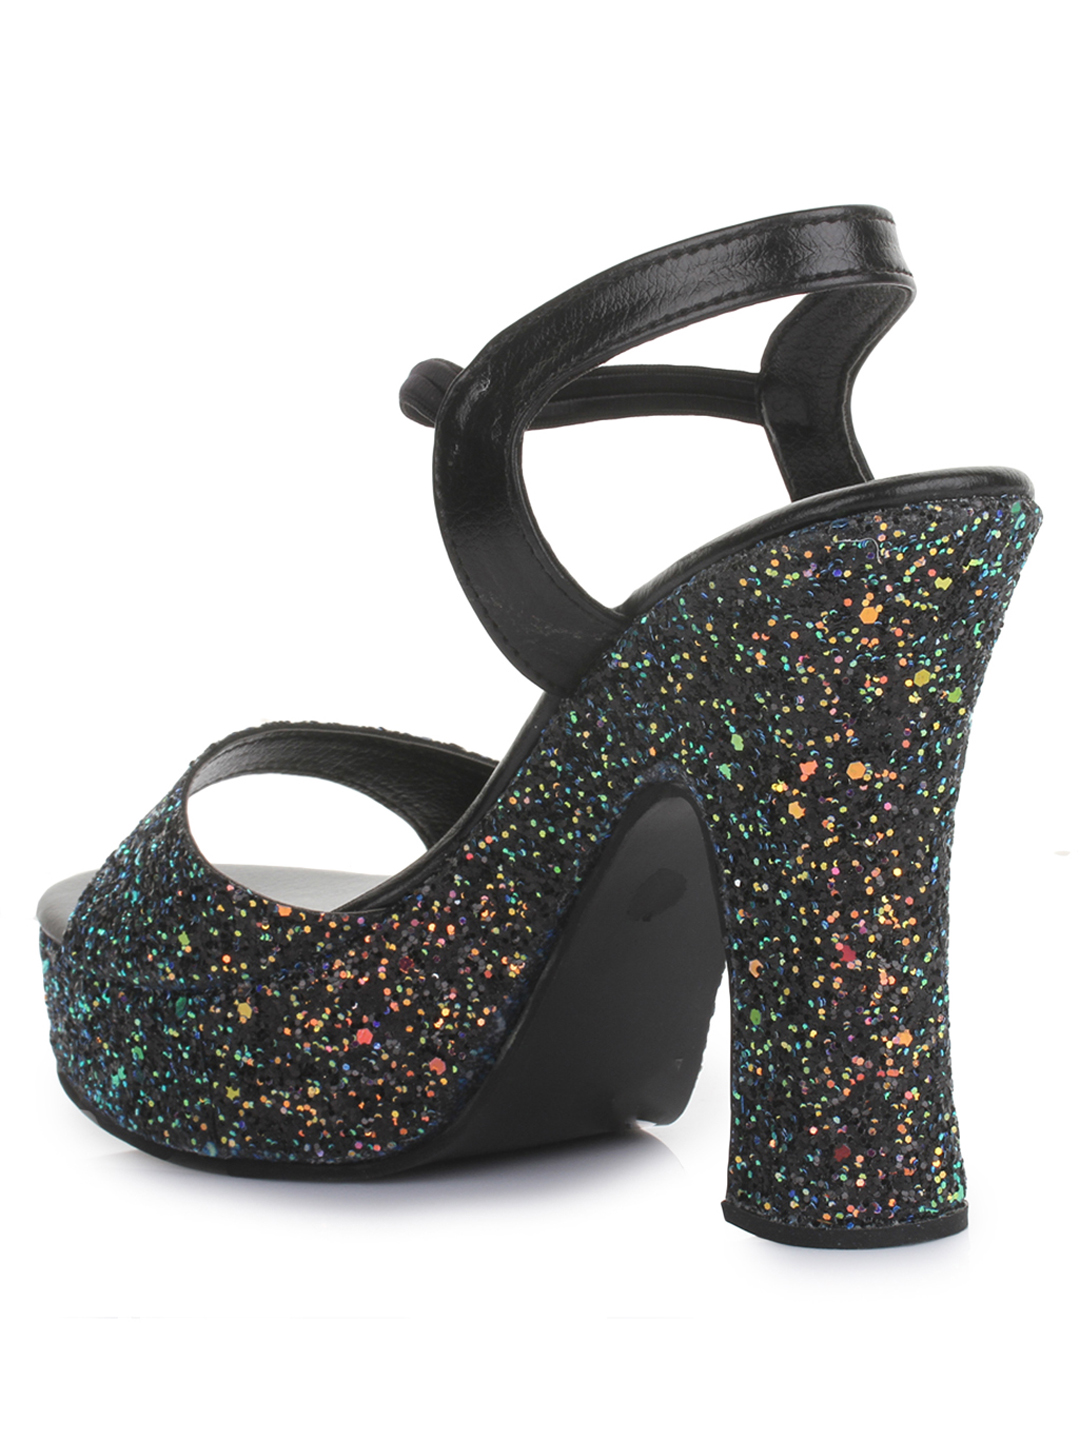 Buy Bruno Manetti Women's Black Heels Online @ ₹2999 from ShopClues